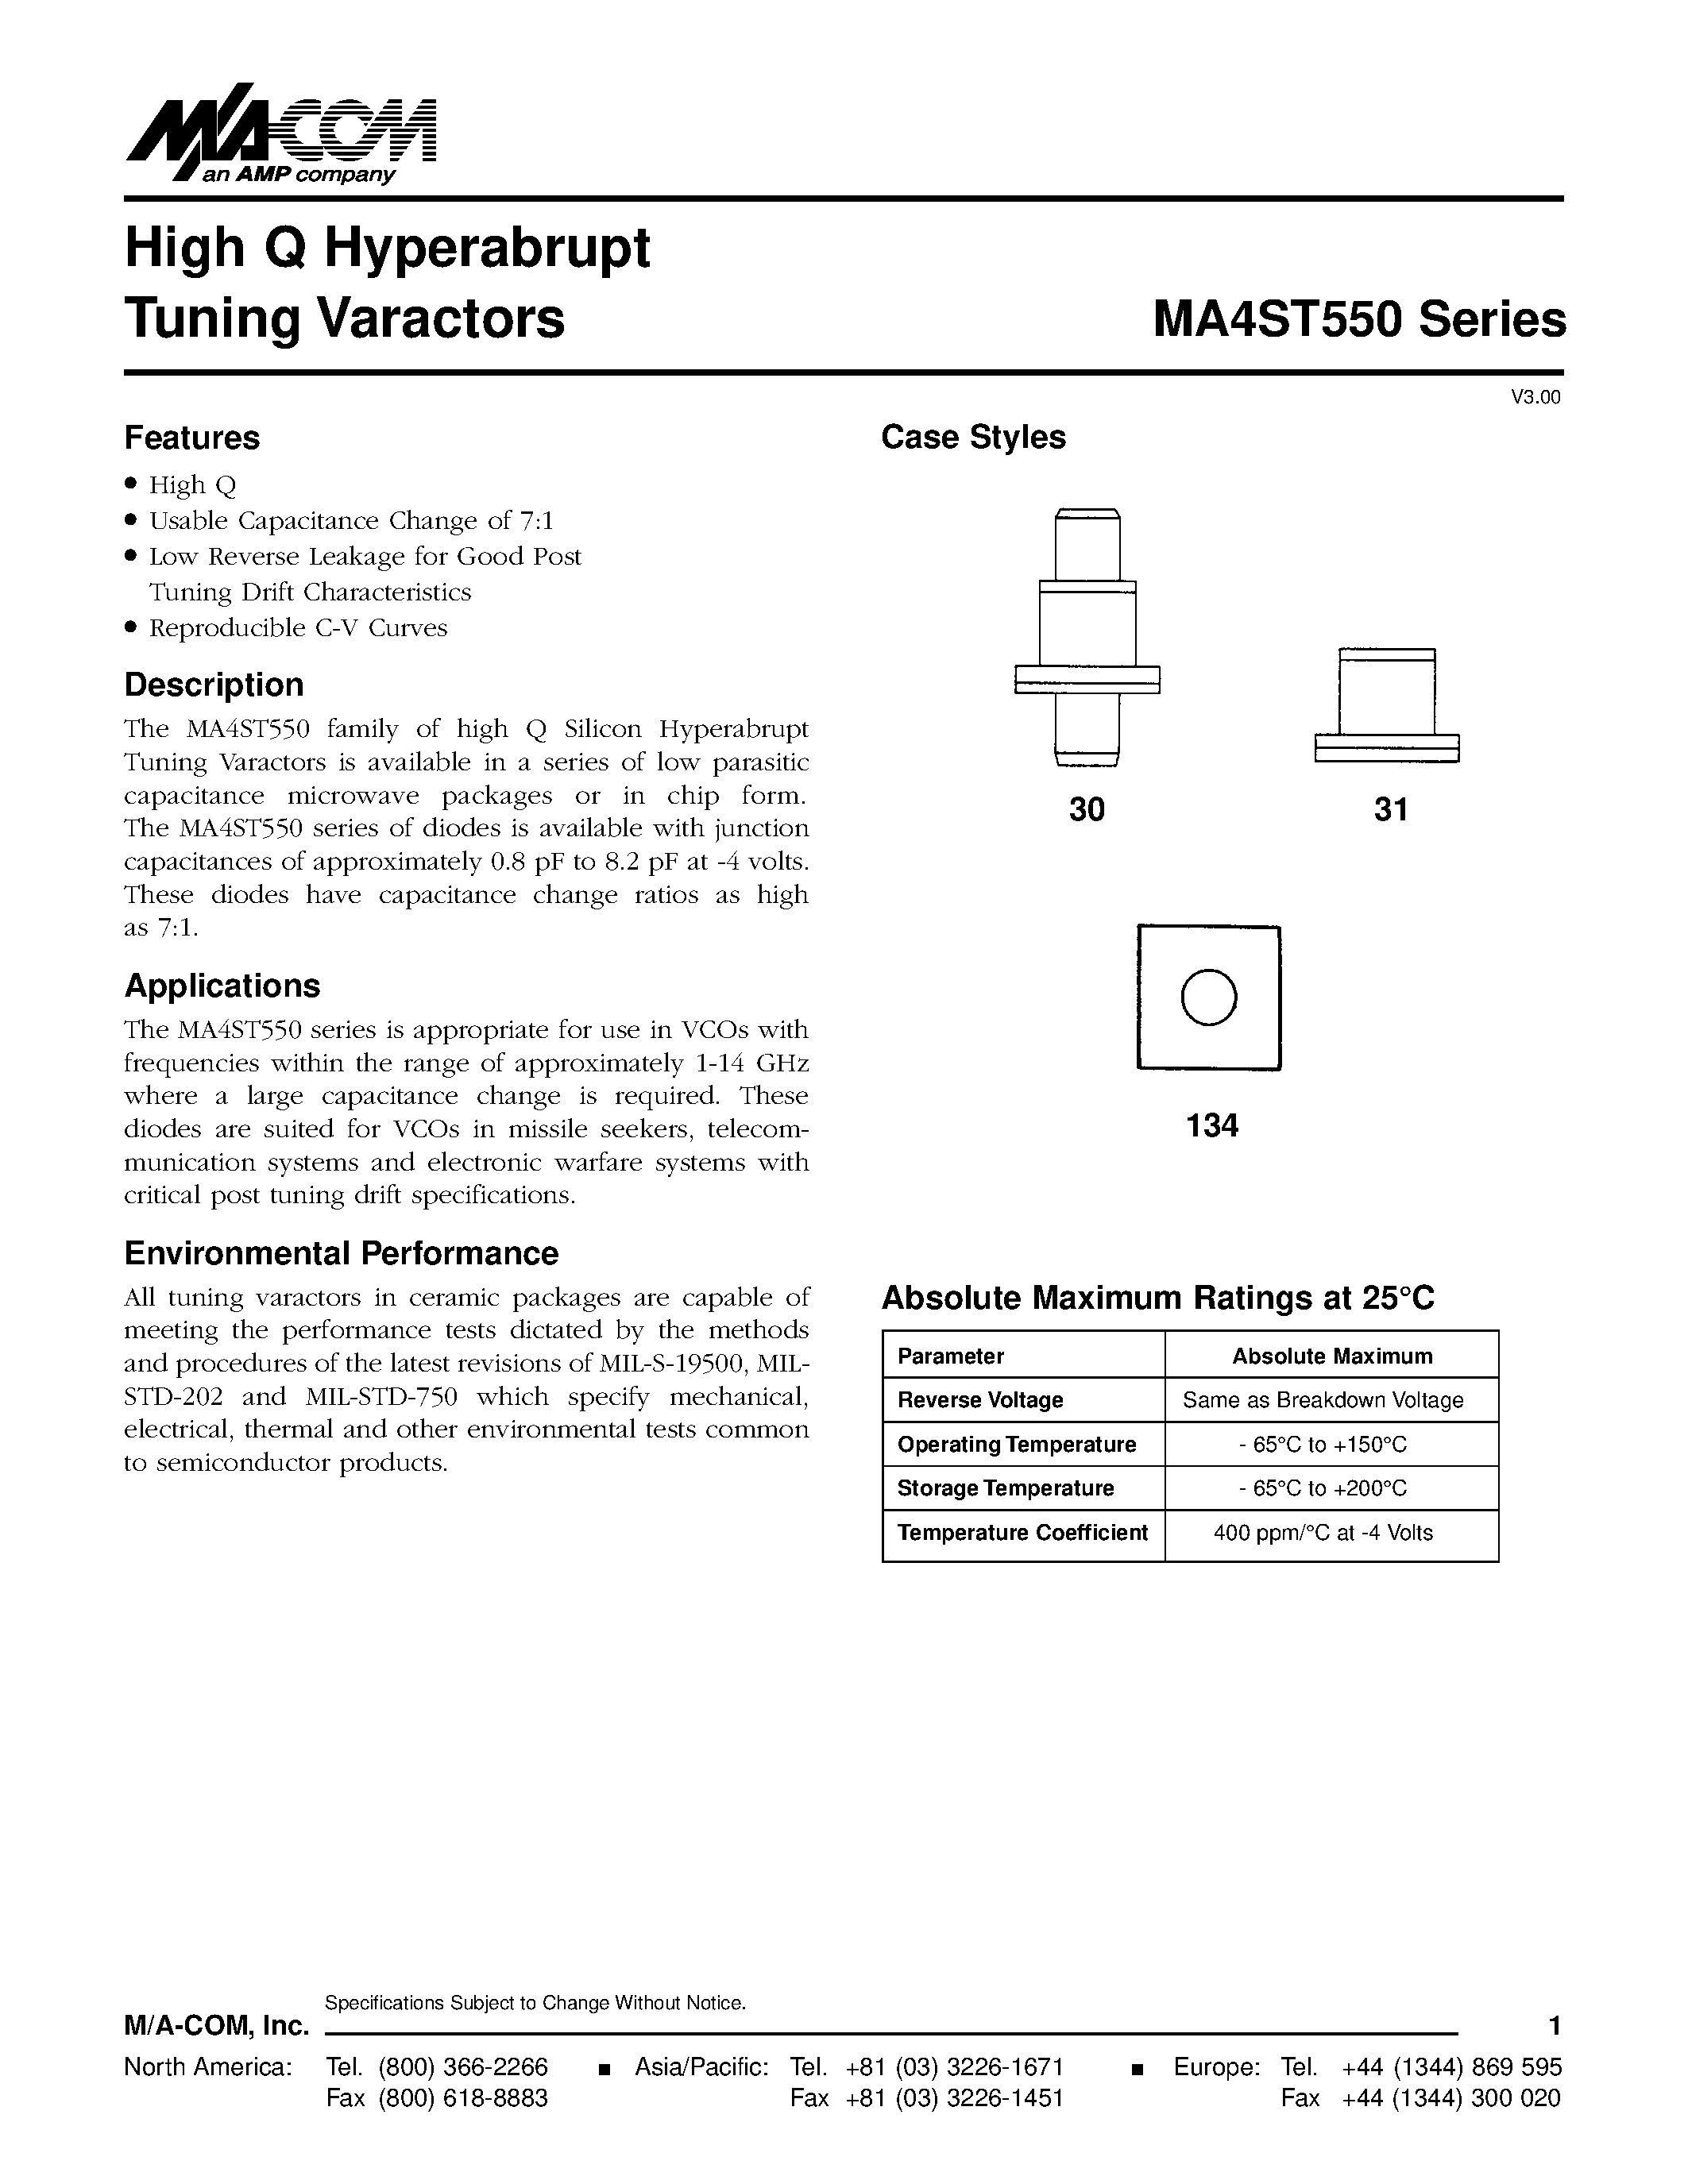 Datasheet MA4ST550 - High Q Hyperabrupt Tuning Varactors page 1